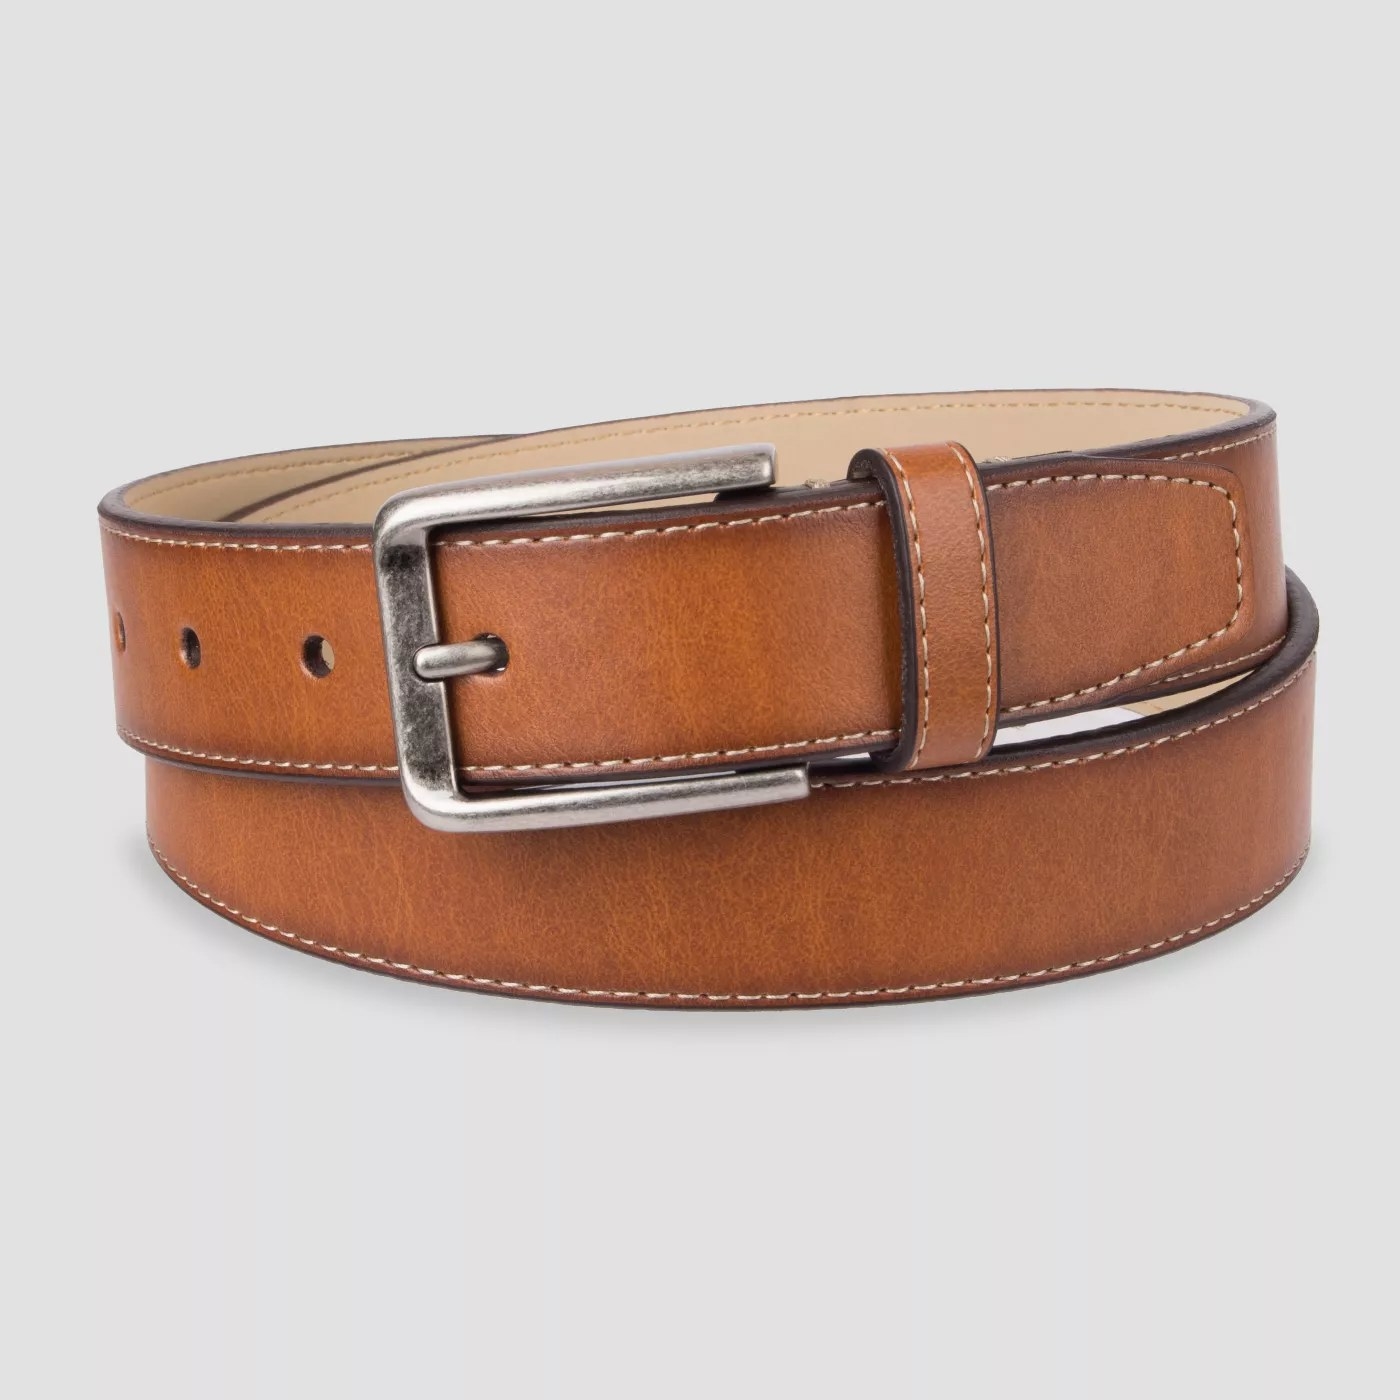 A tan belt